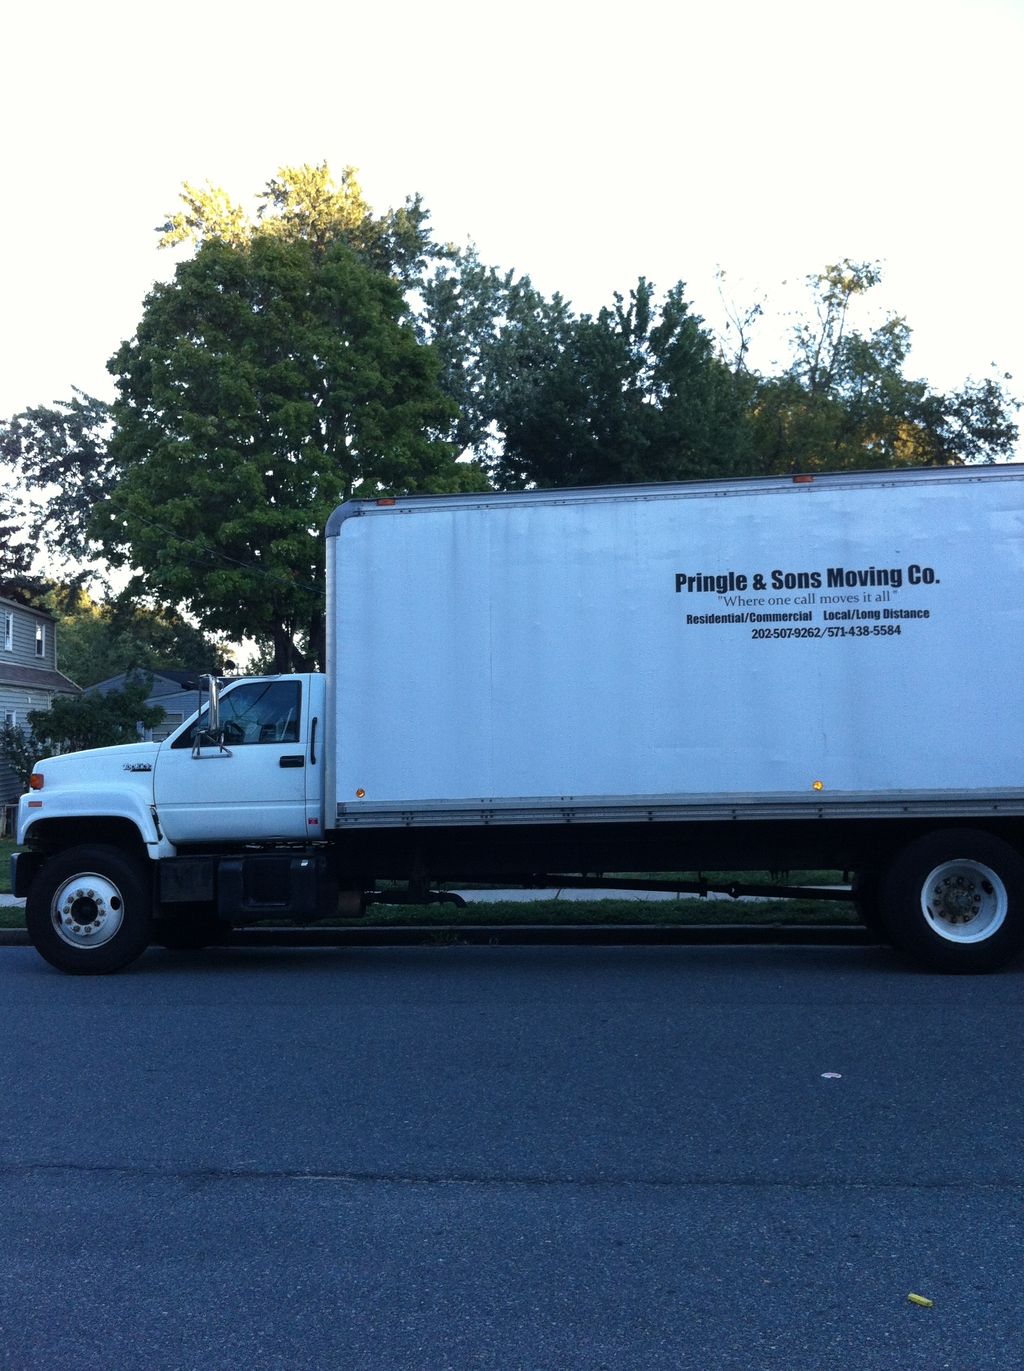 Pringle & Sons Moving Co., LLC